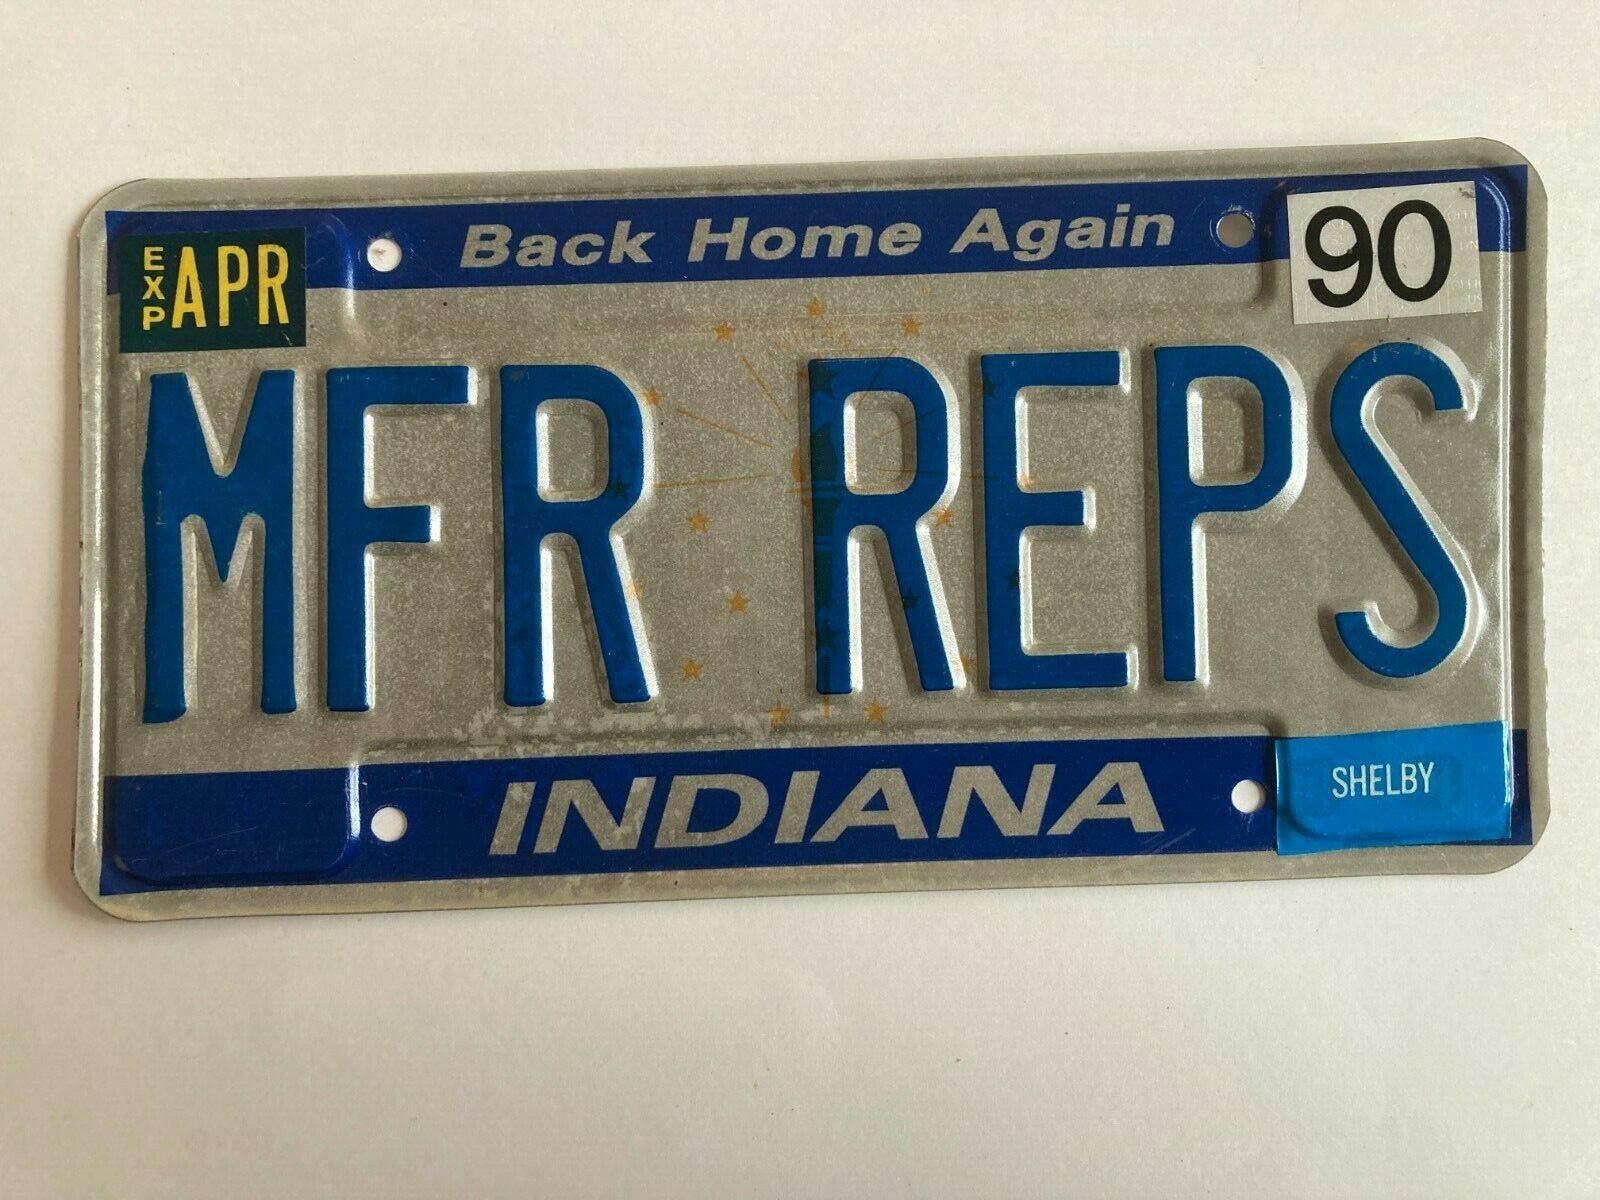 Vanity License Plate MFR REPS Manufacturer Representatives Sales Indiana